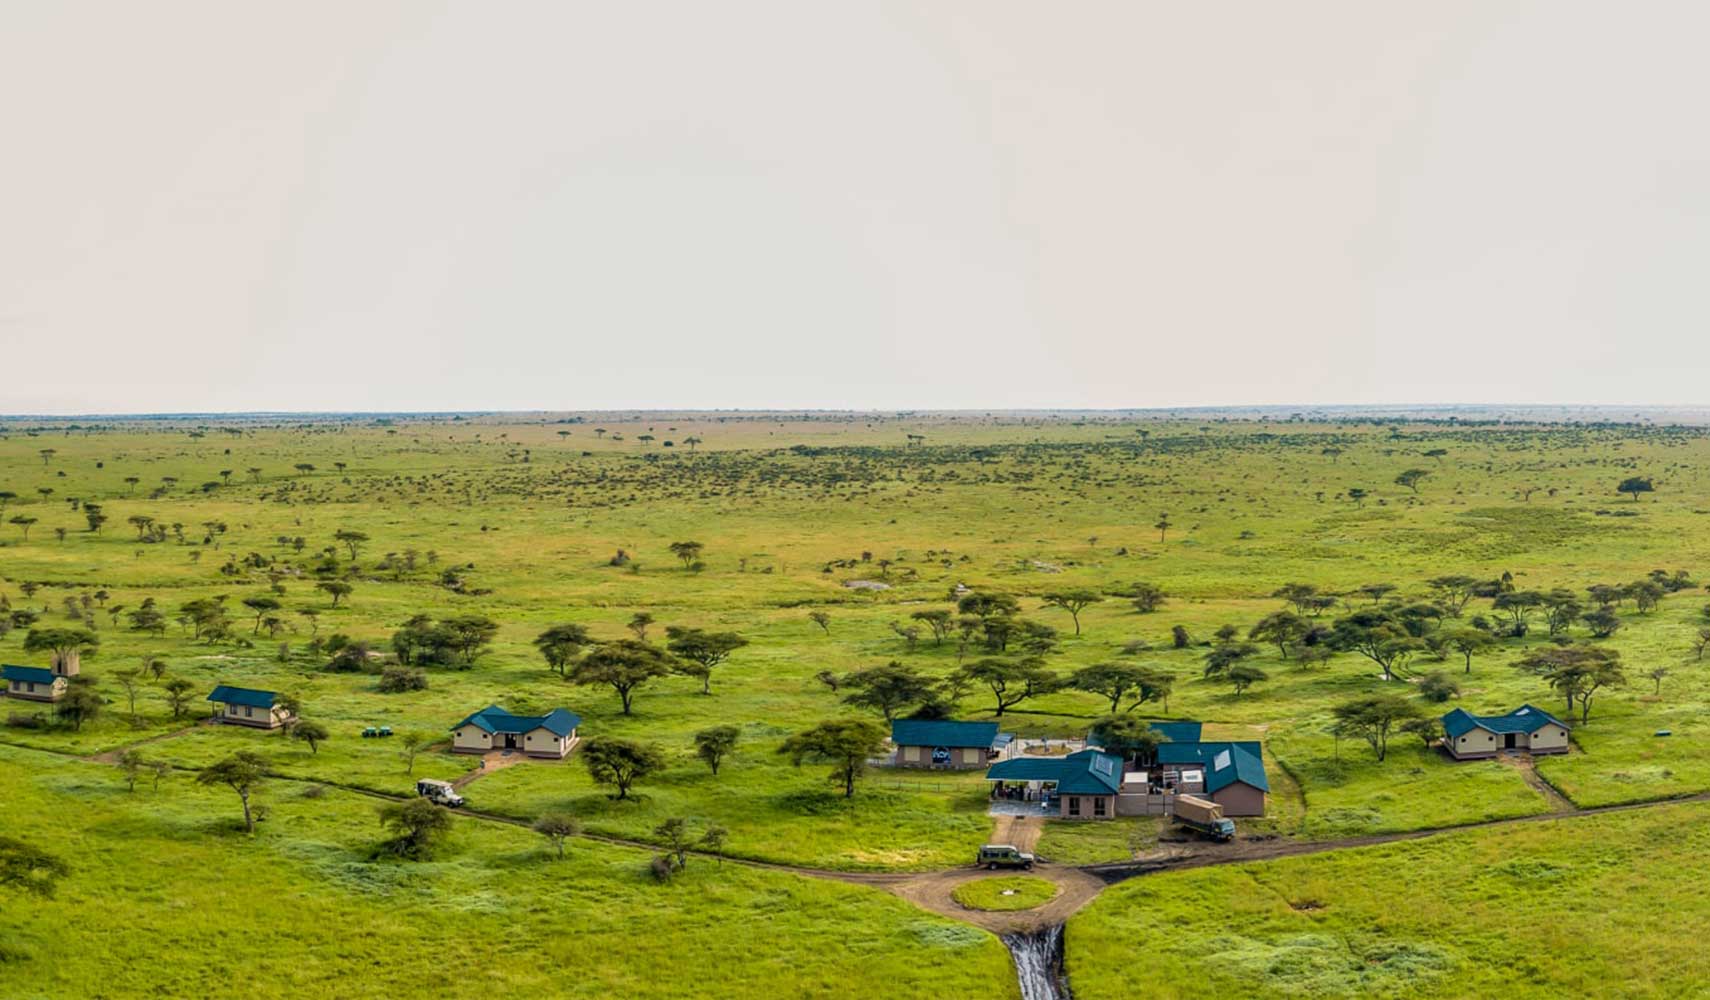 Sametu Serengeti camp